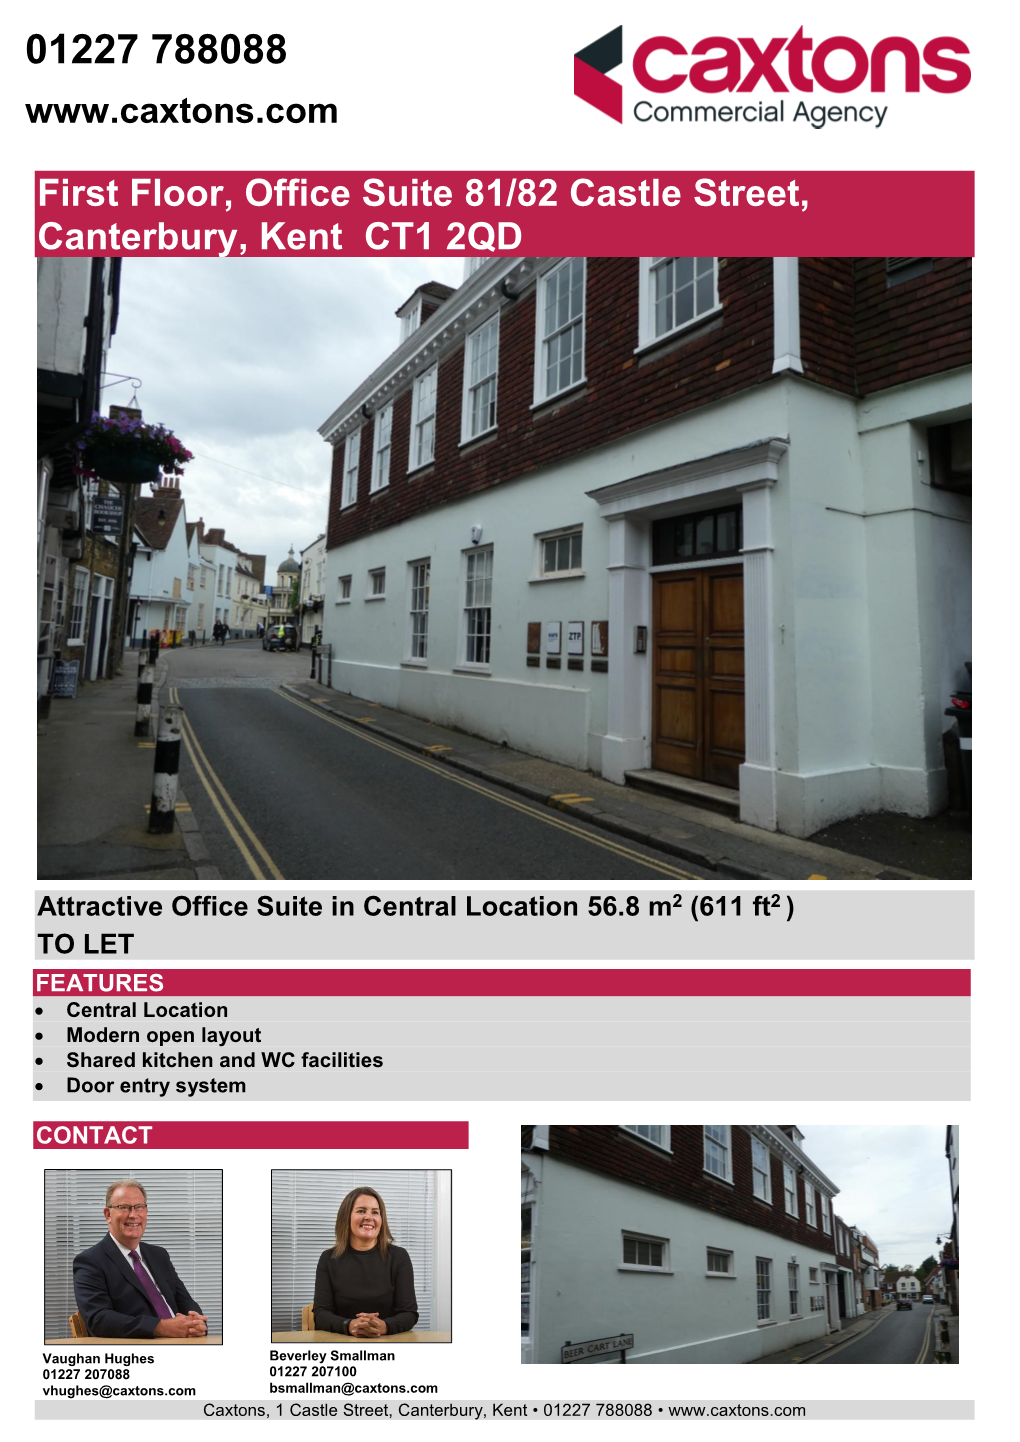 First Floor, Office Suite 81/82 Castle Street, Canterbury, Kent CT1 2QD